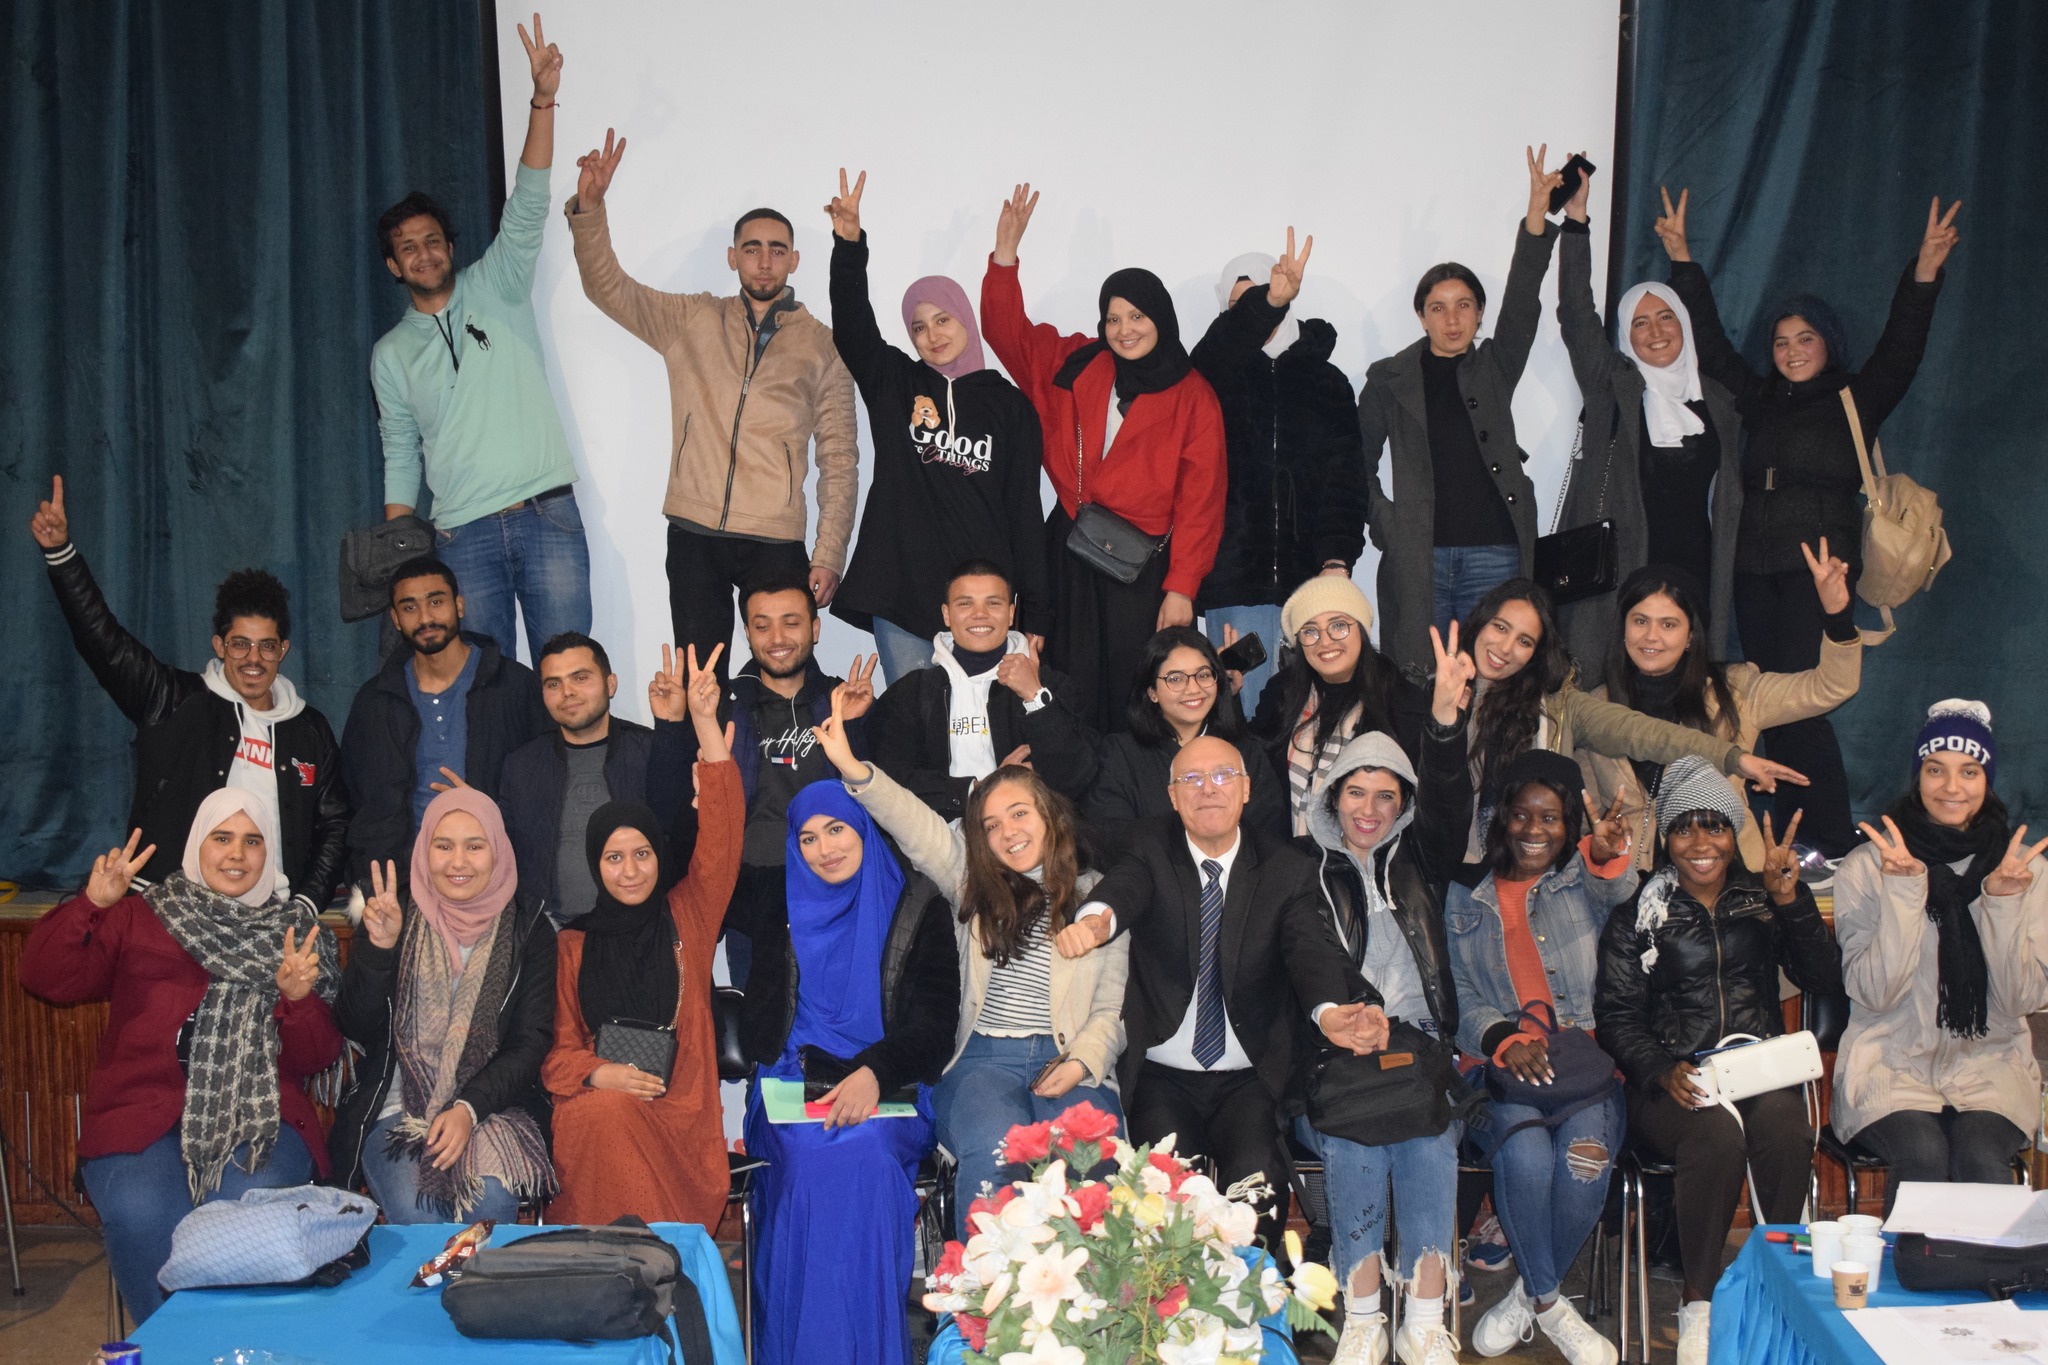 February 2023 – Peace for All CC in Tunisia honored the World Interfaith Harmony WeekFebruary 2023